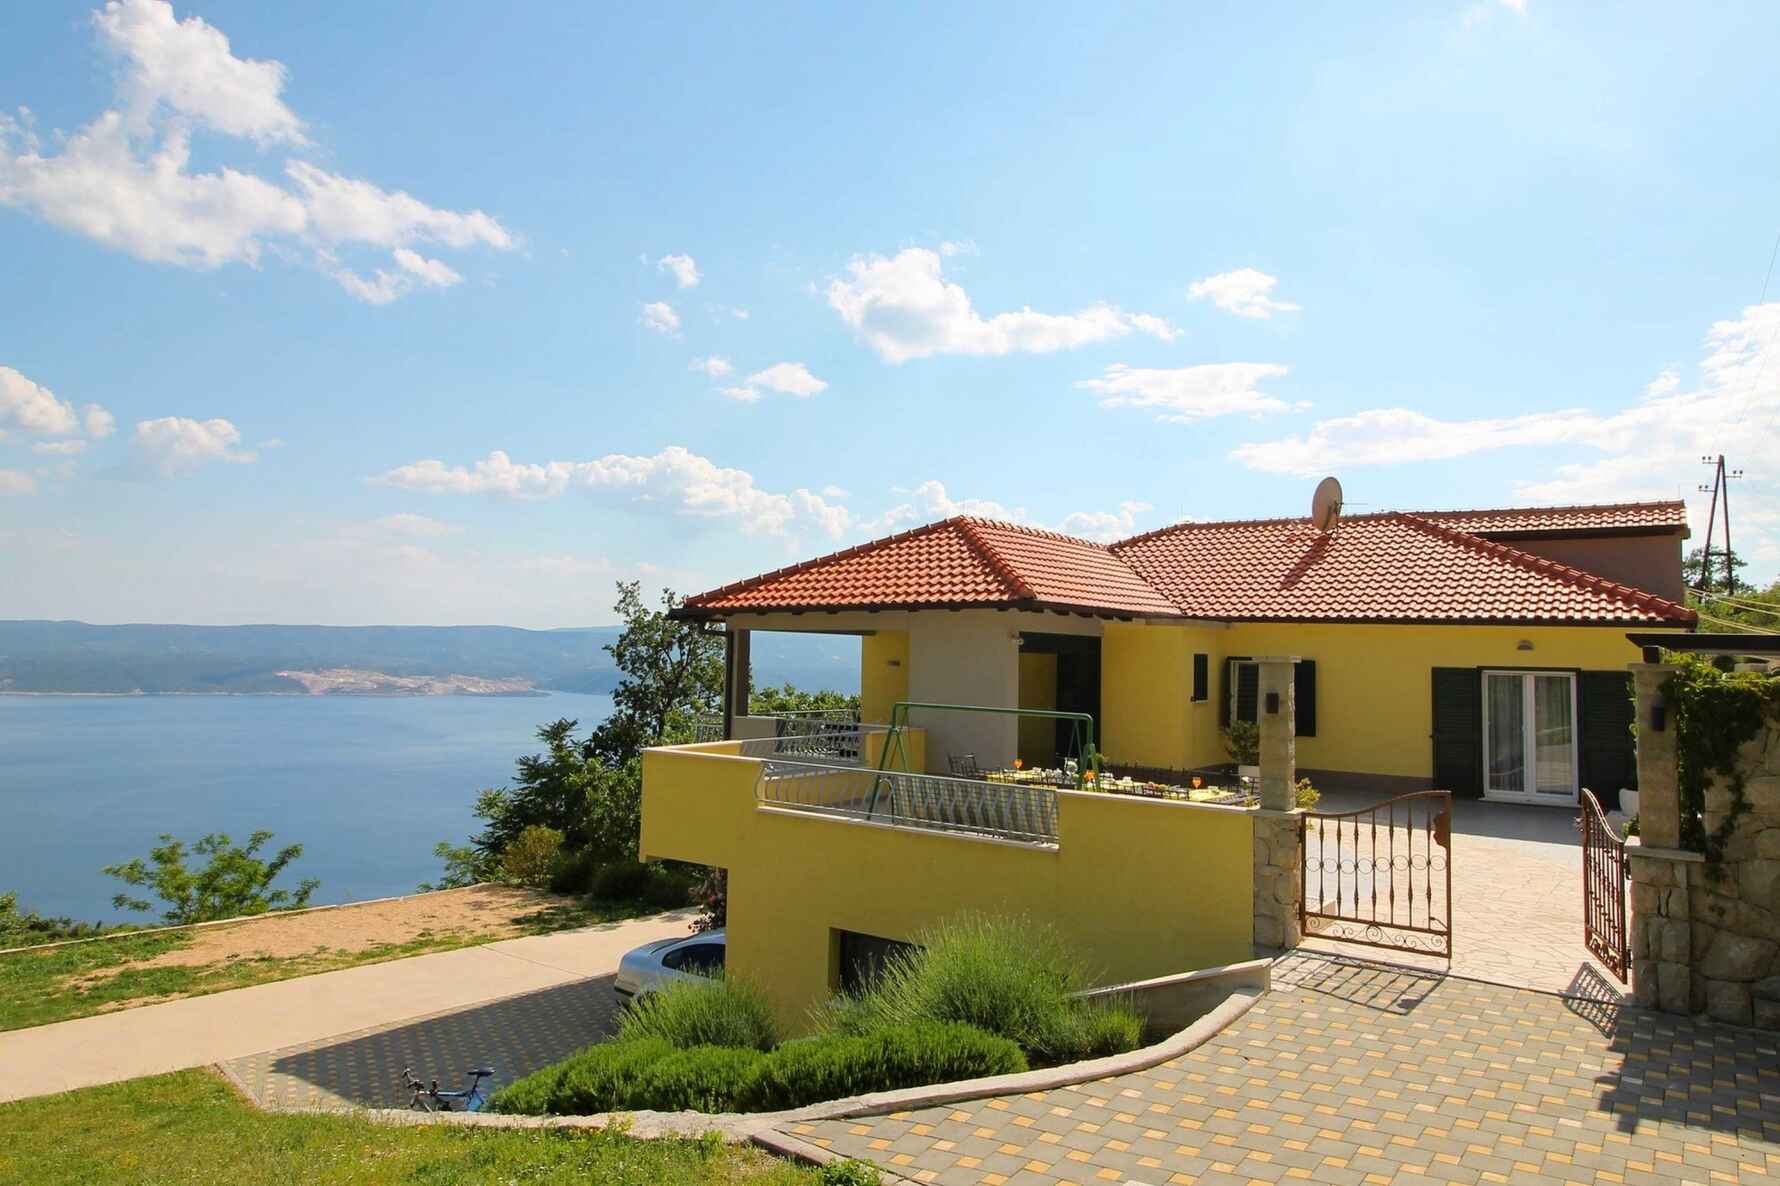 Our villa in Omis, Croatia